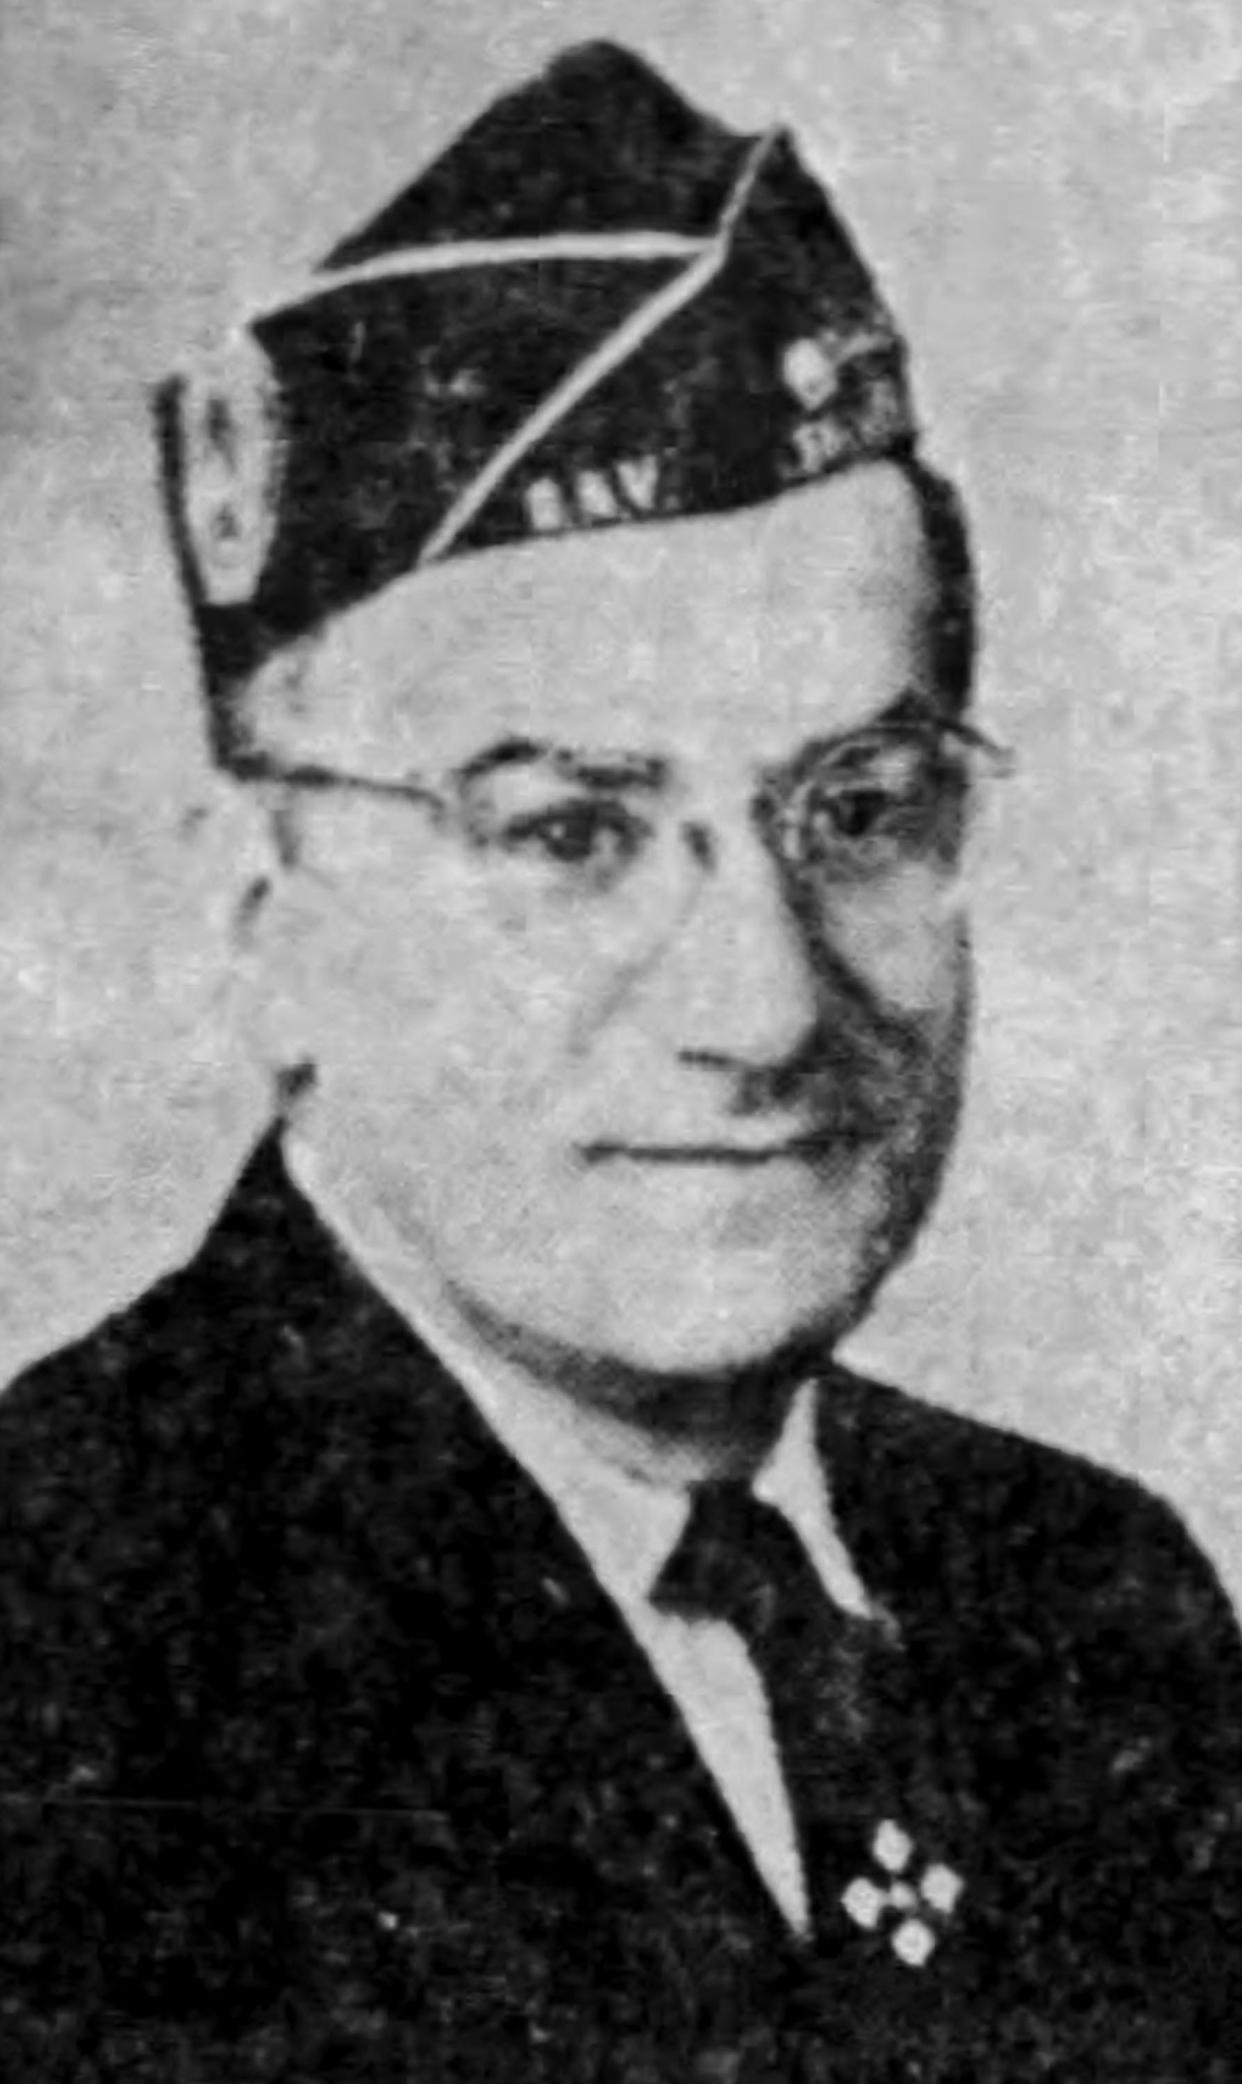 World War II veteran Fred Schneikert as he appeared in a 1958 Sheboygan clipping.